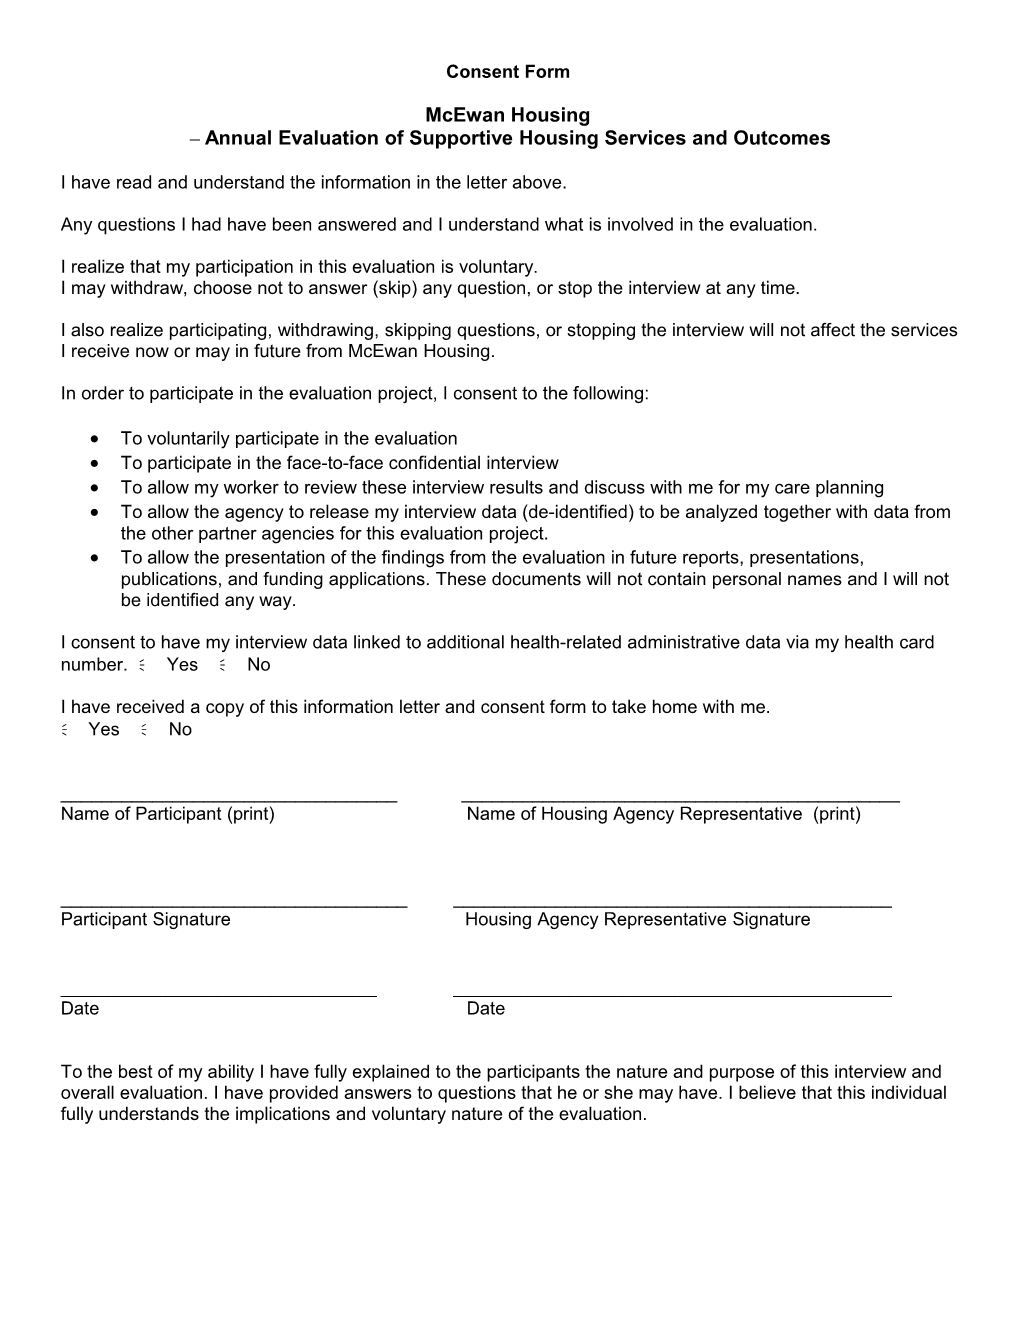 Information Letter / Consent Form